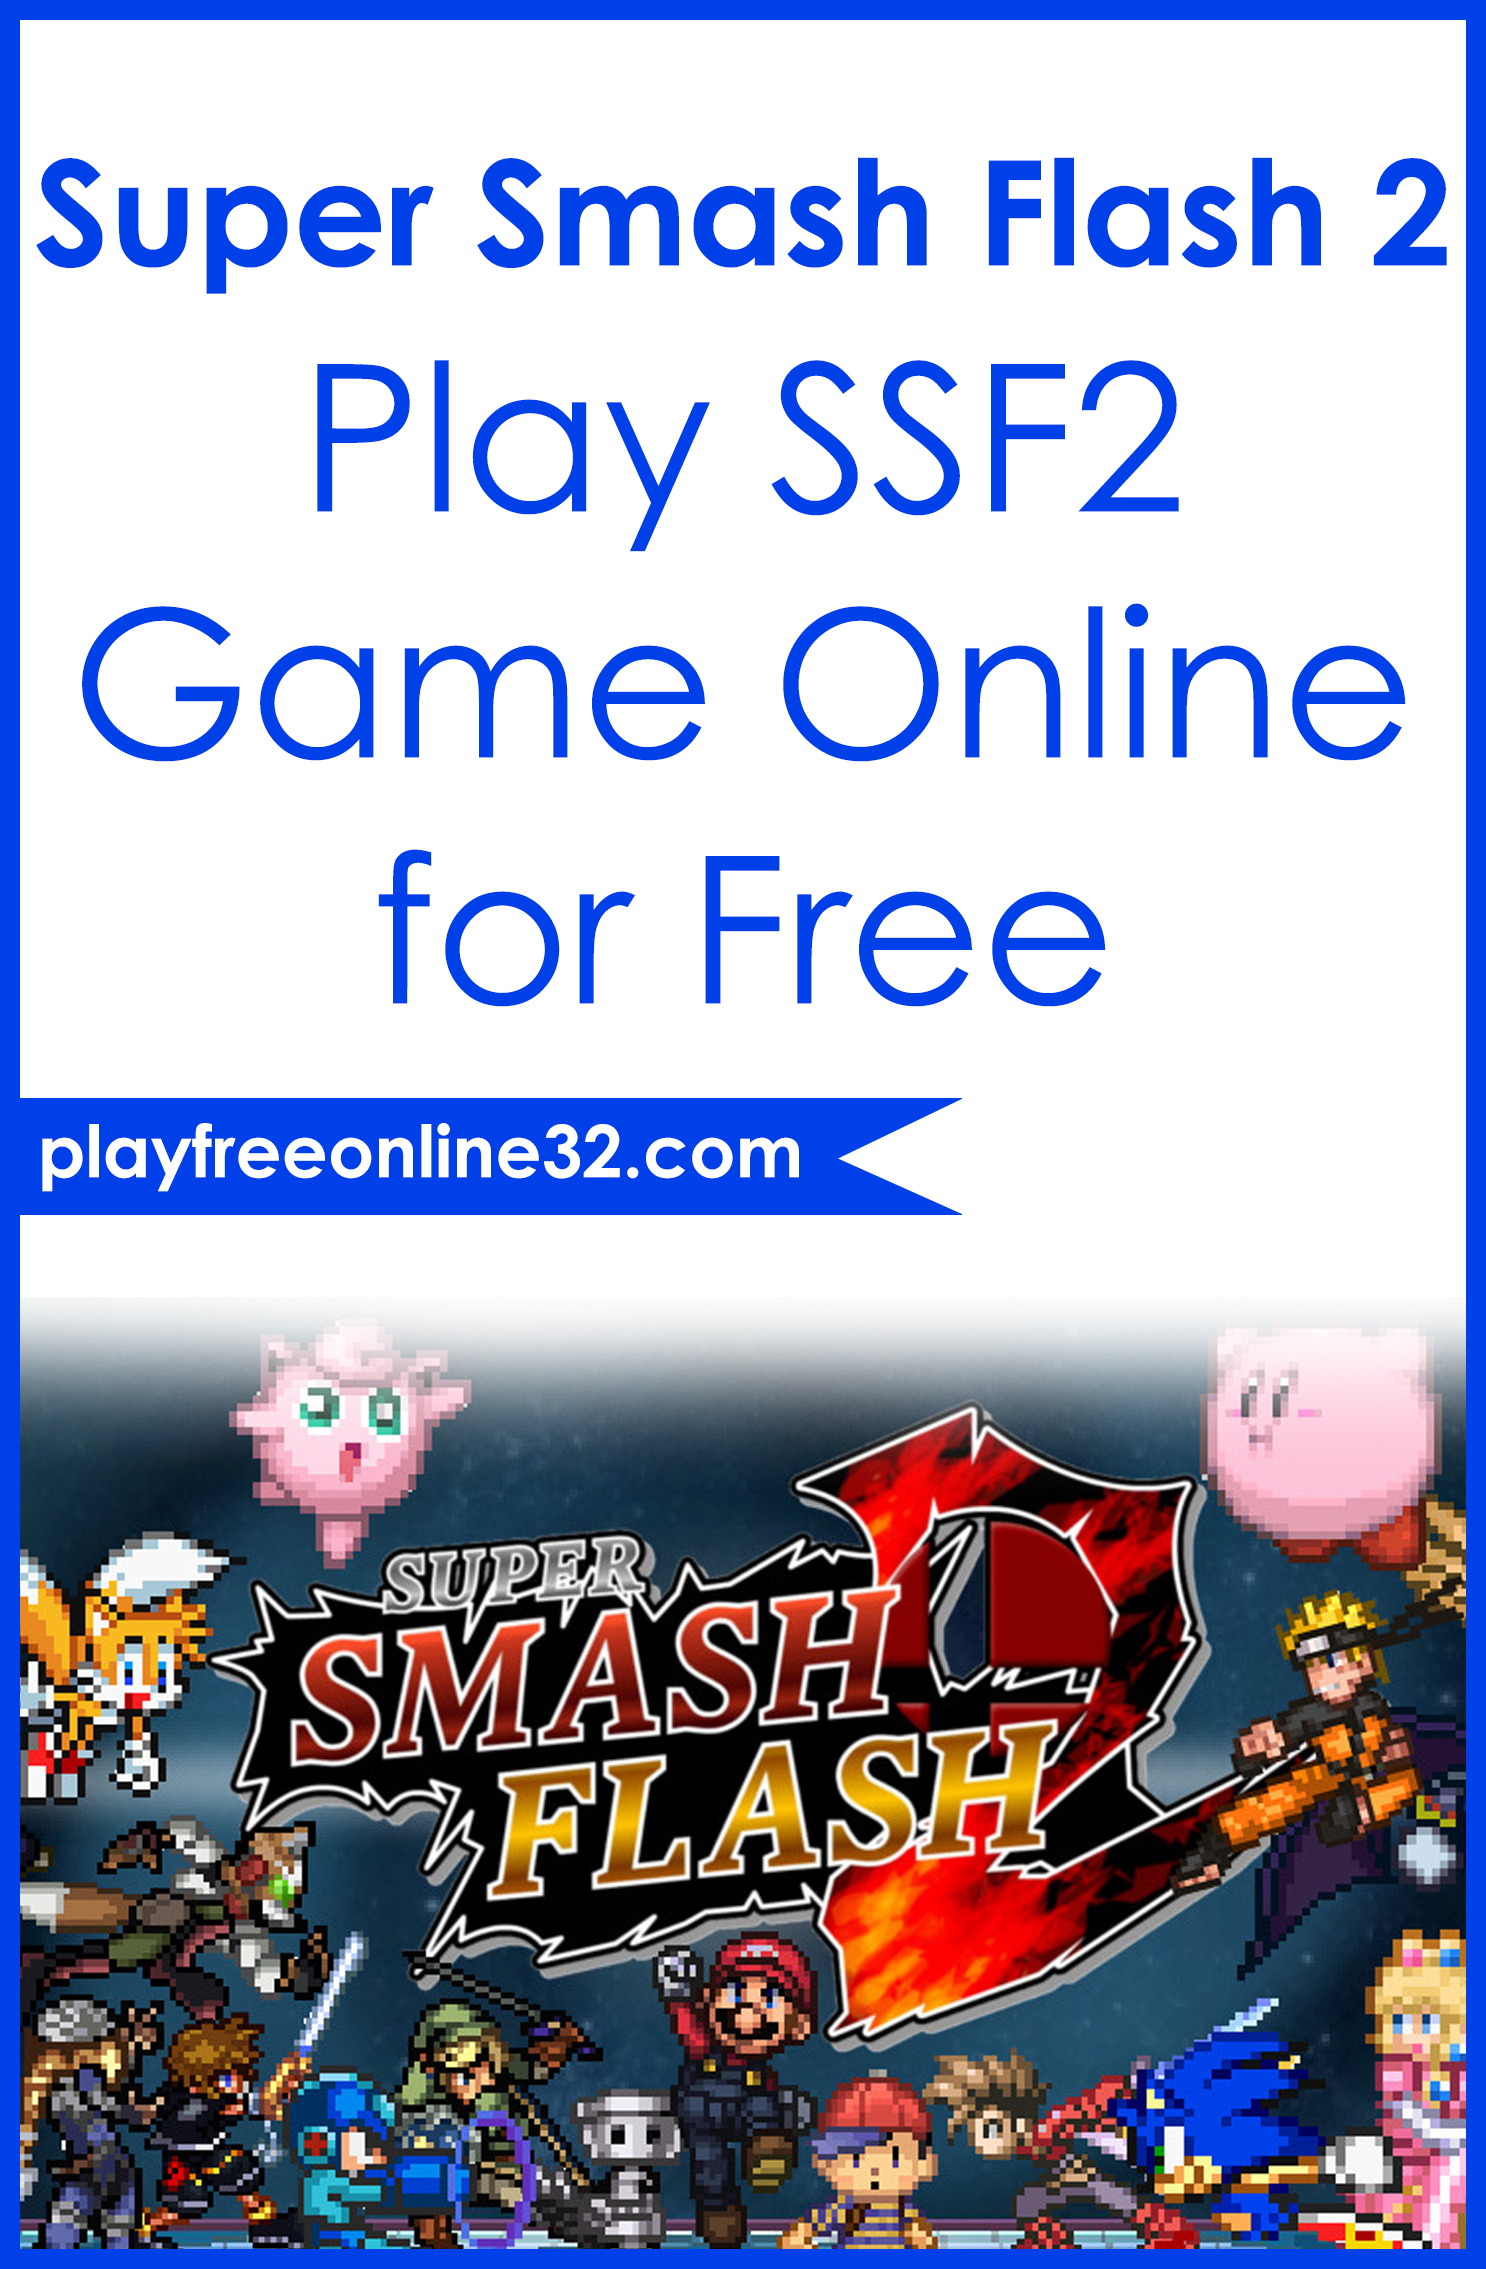 Super Smash Flash 2 • Play SSF2 Game Online for Free Pinterest